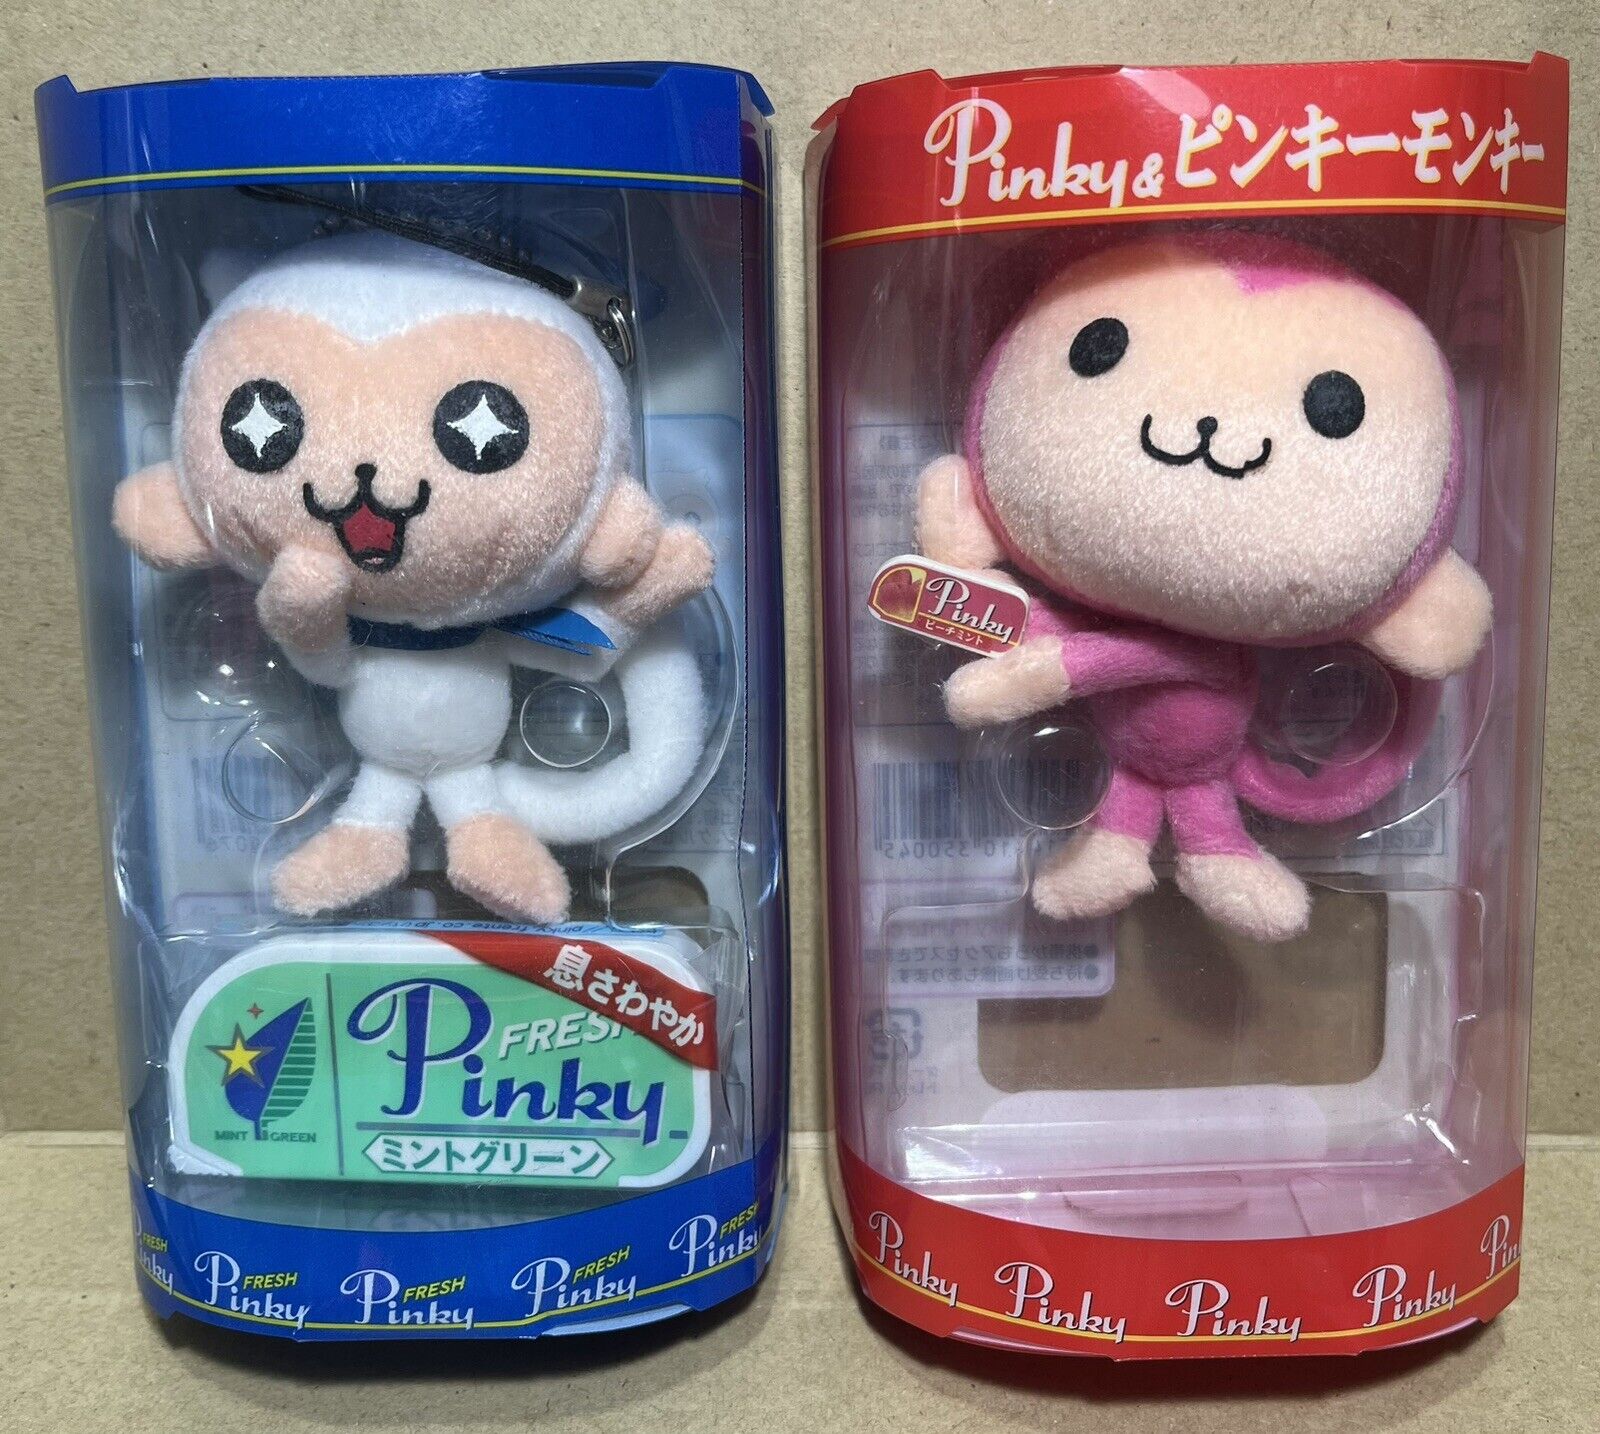 Pinky Pink Monkey and White Monkey Vintage